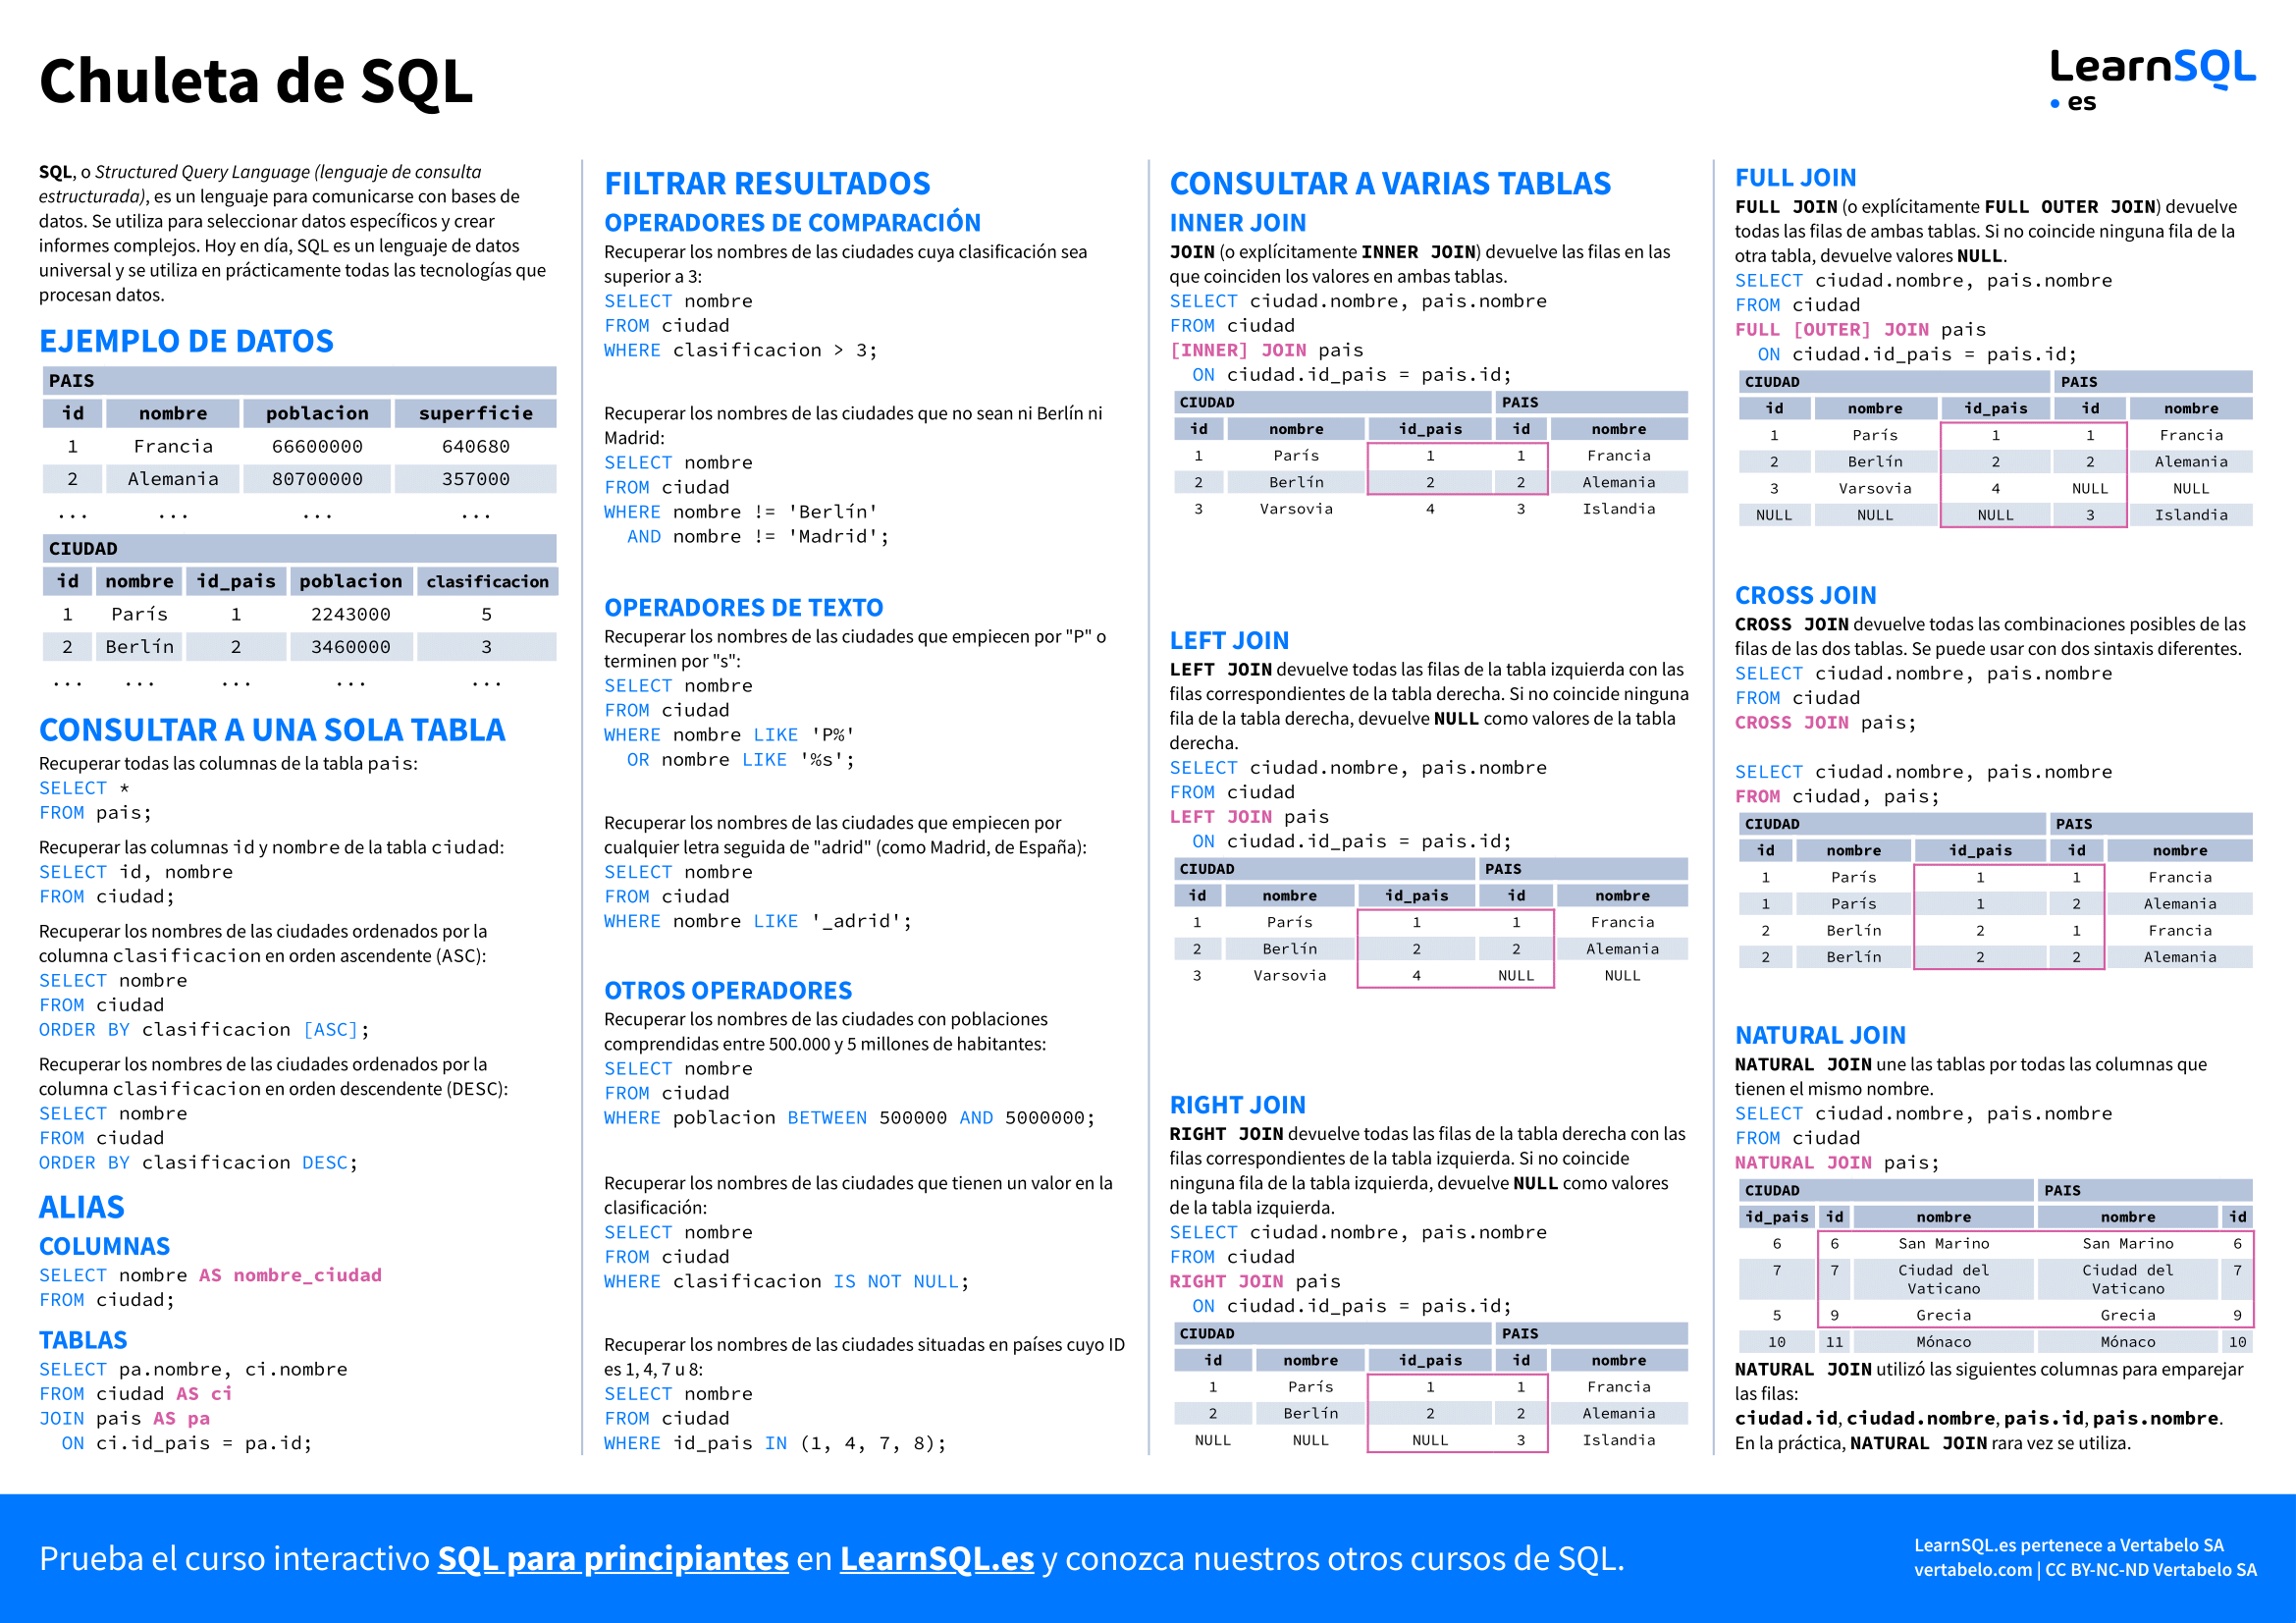 Primera página de la Chuleta de SQL